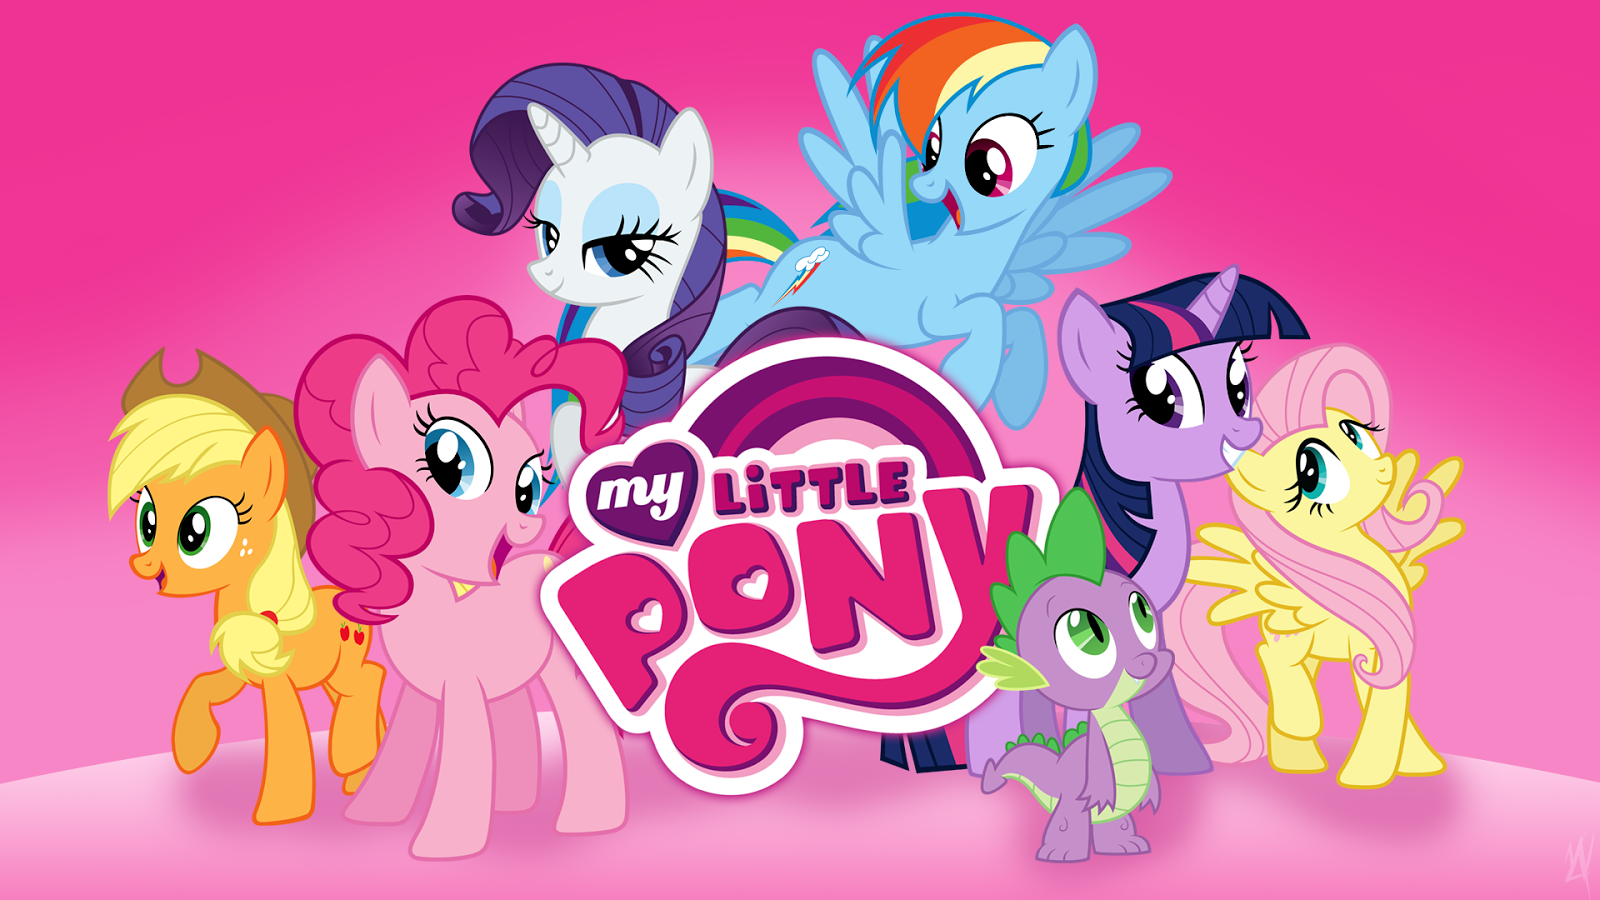 My Little Pony Characters - Giant Bomb